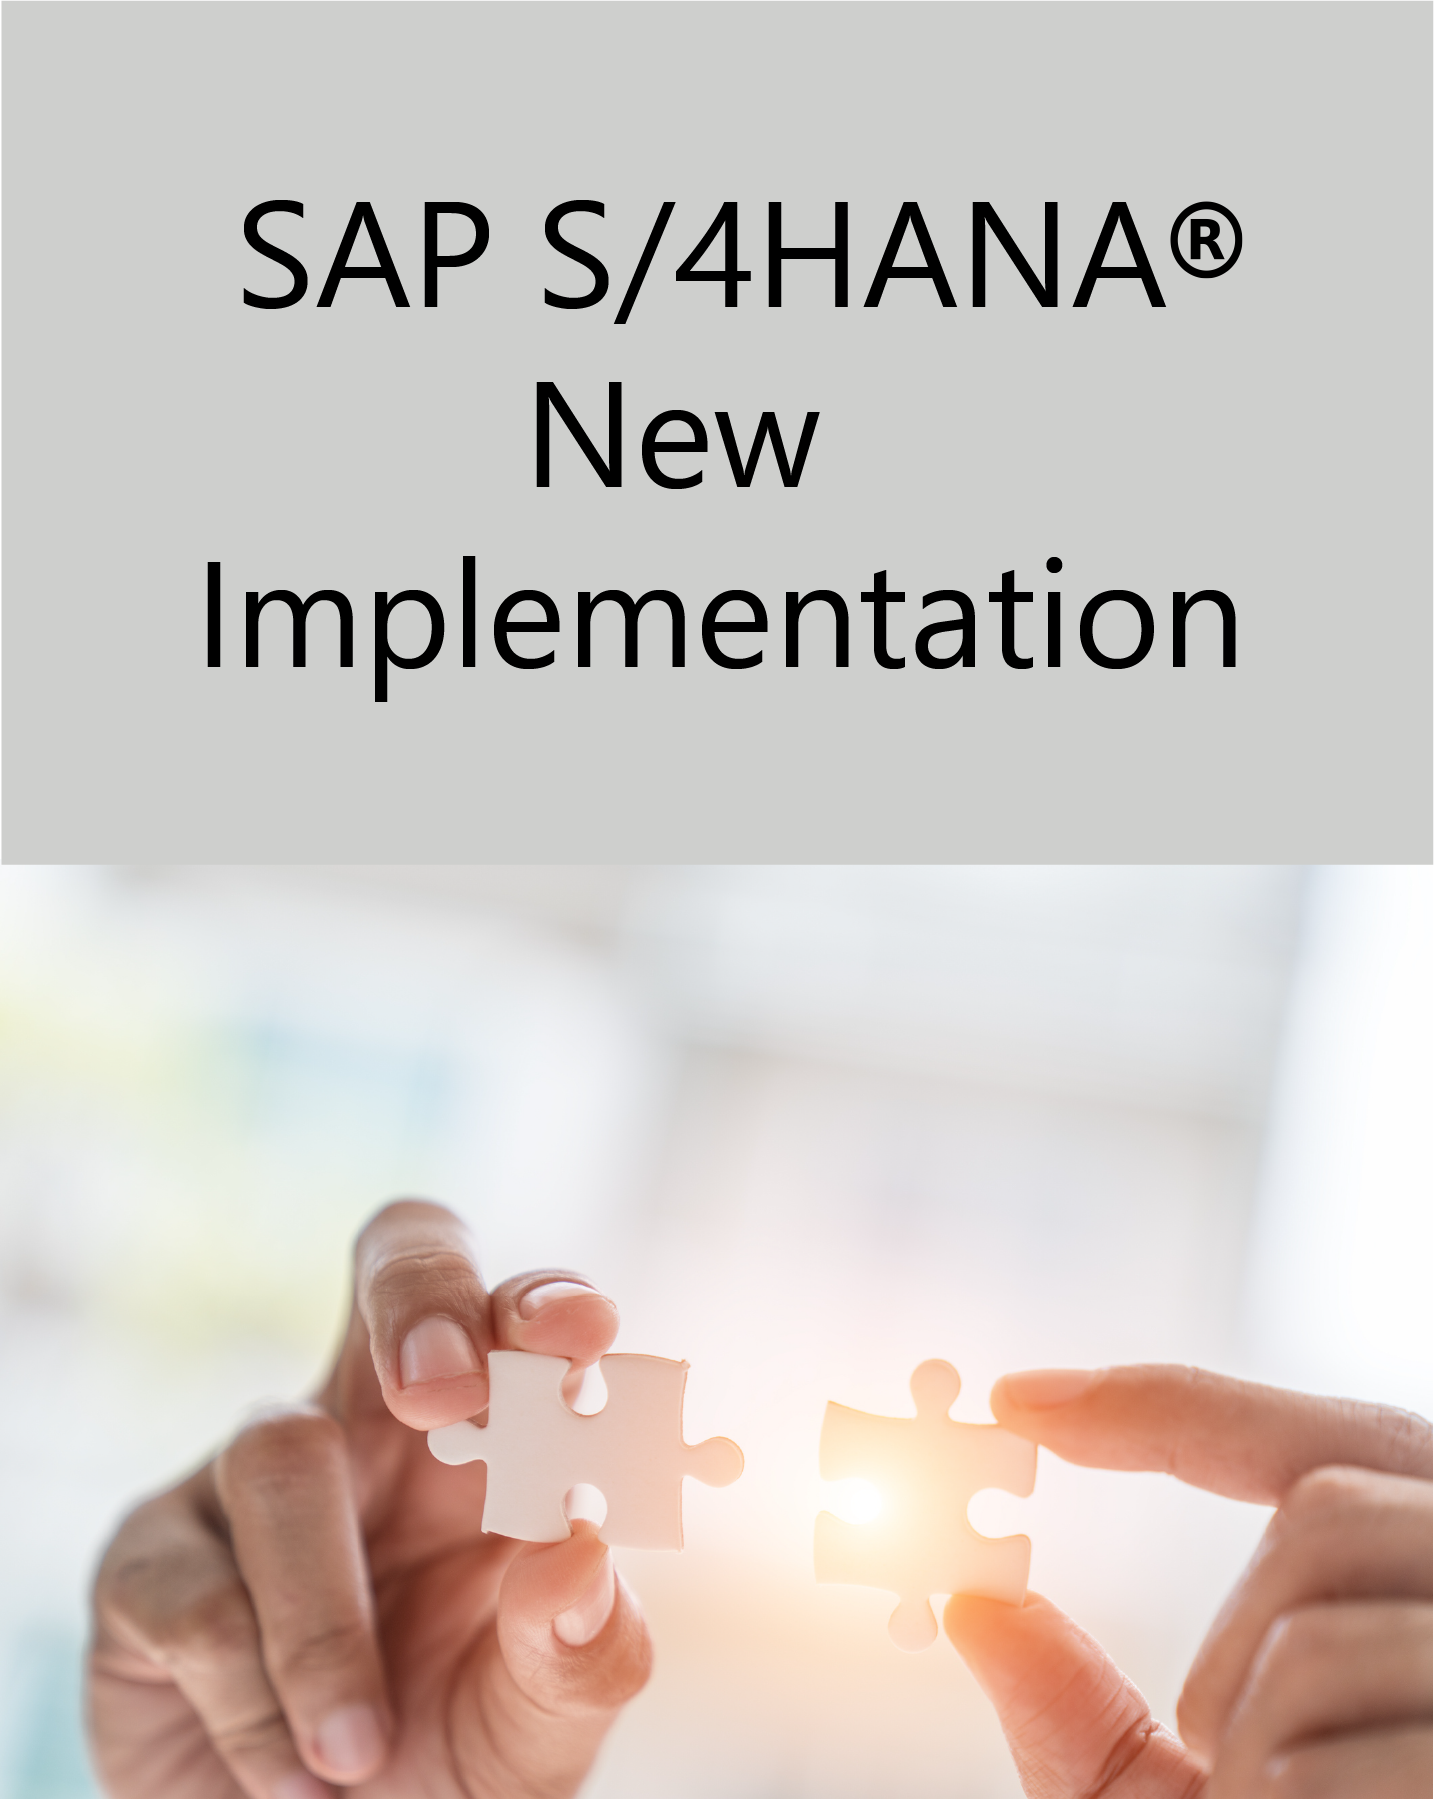 SAP S/4HANA New Implementation